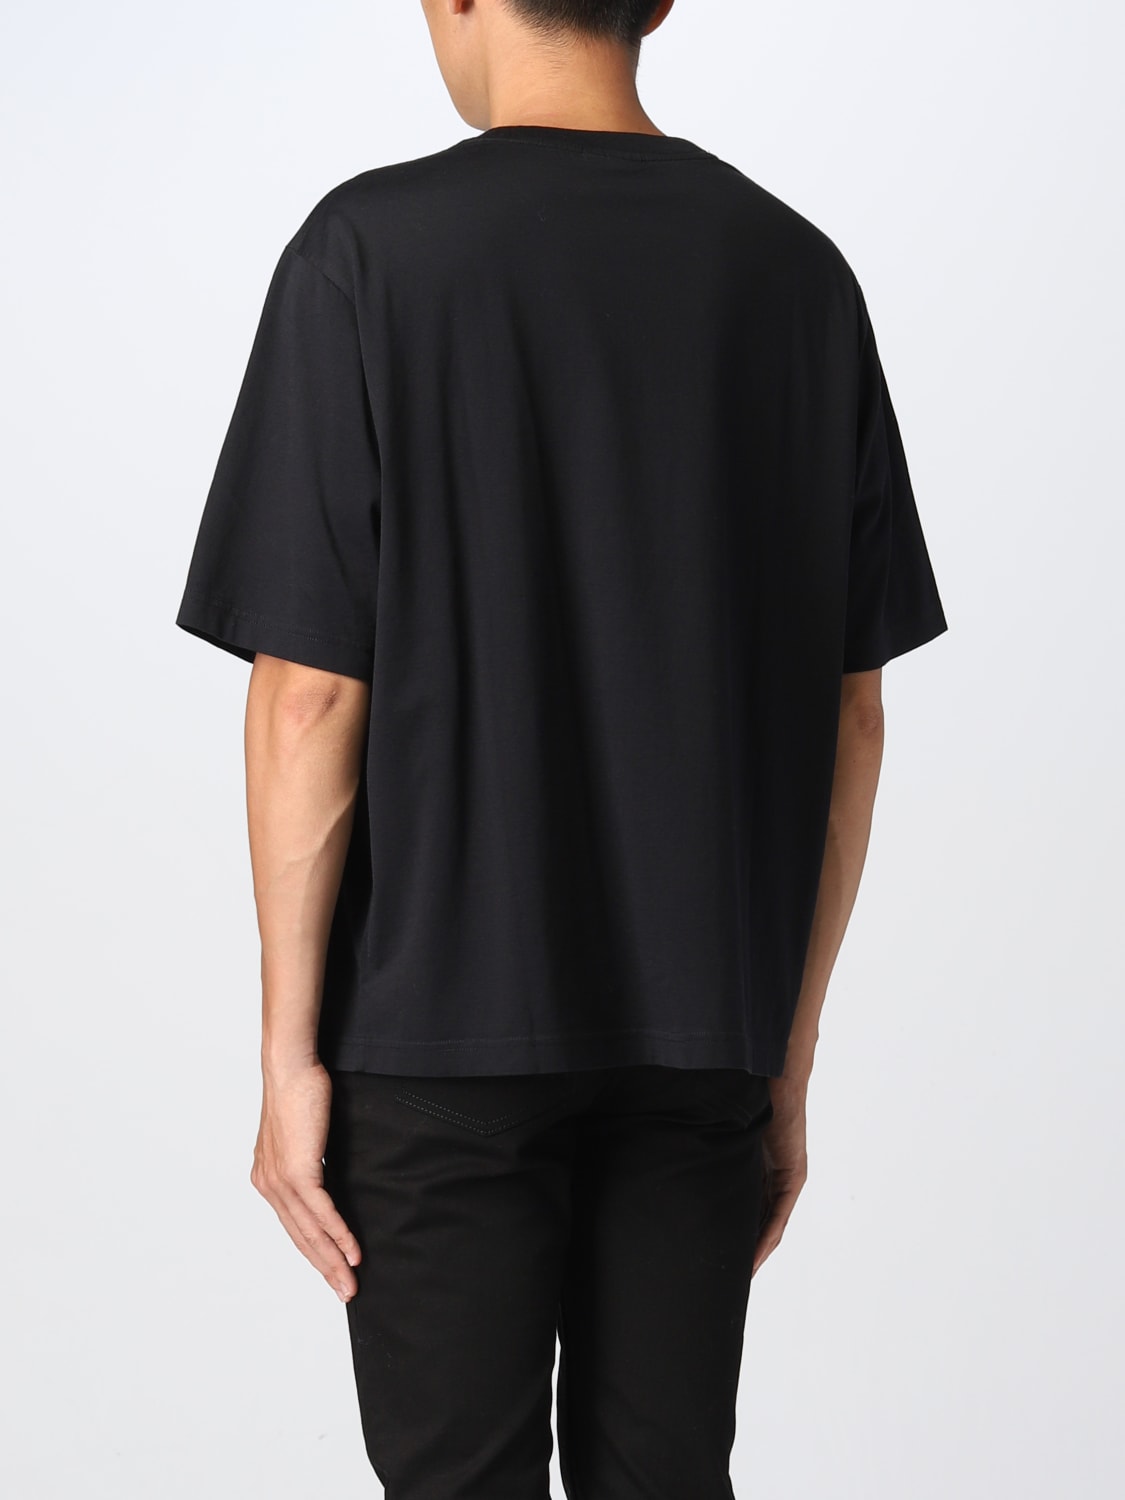 ACNE STUDIOS: t-shirt for man - Black | Acne Studios t-shirt CL0219 ...